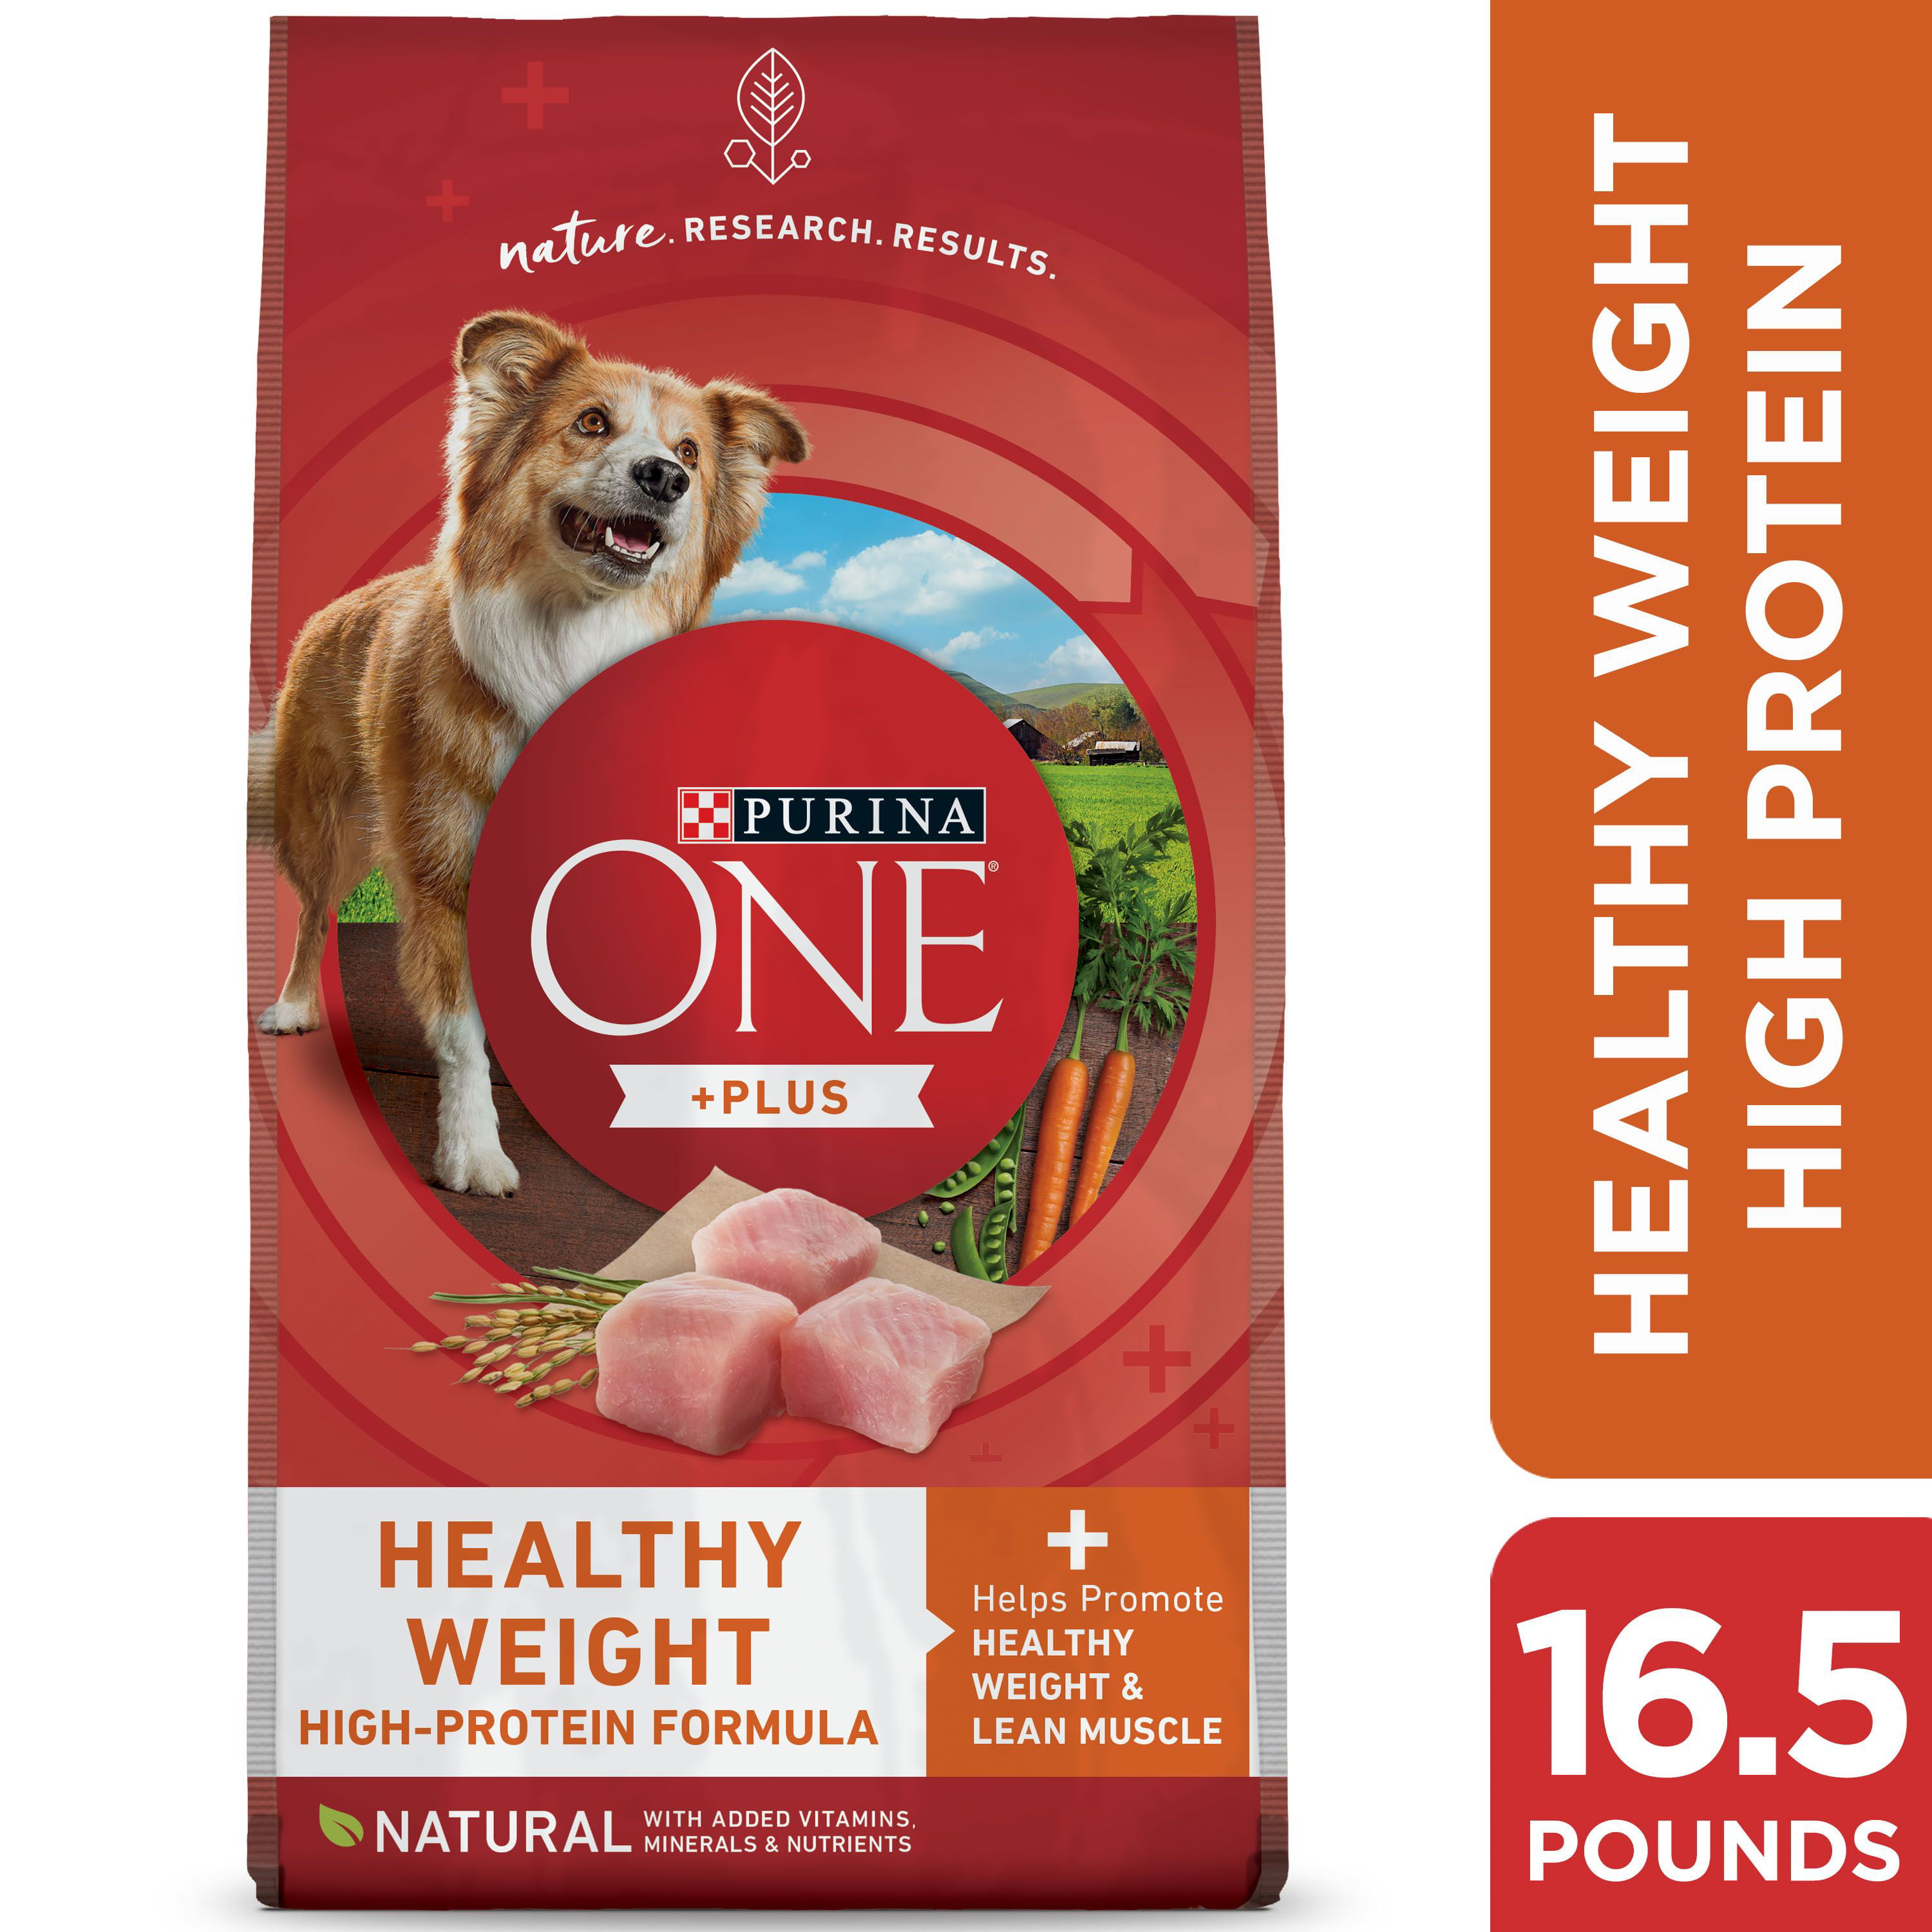 healthiest dog food